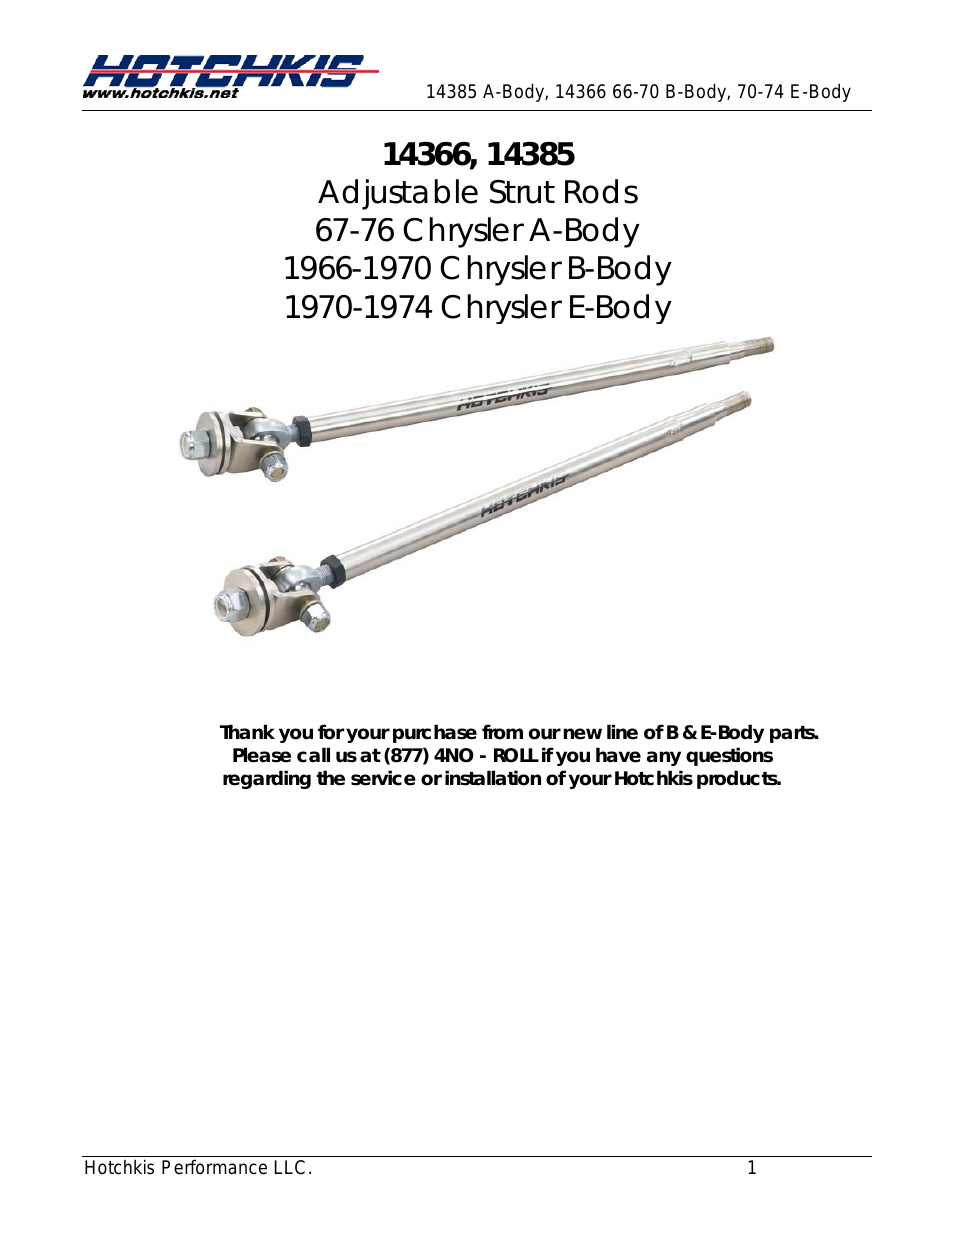 14366 Dodge A Body Adjustable Strut Rods